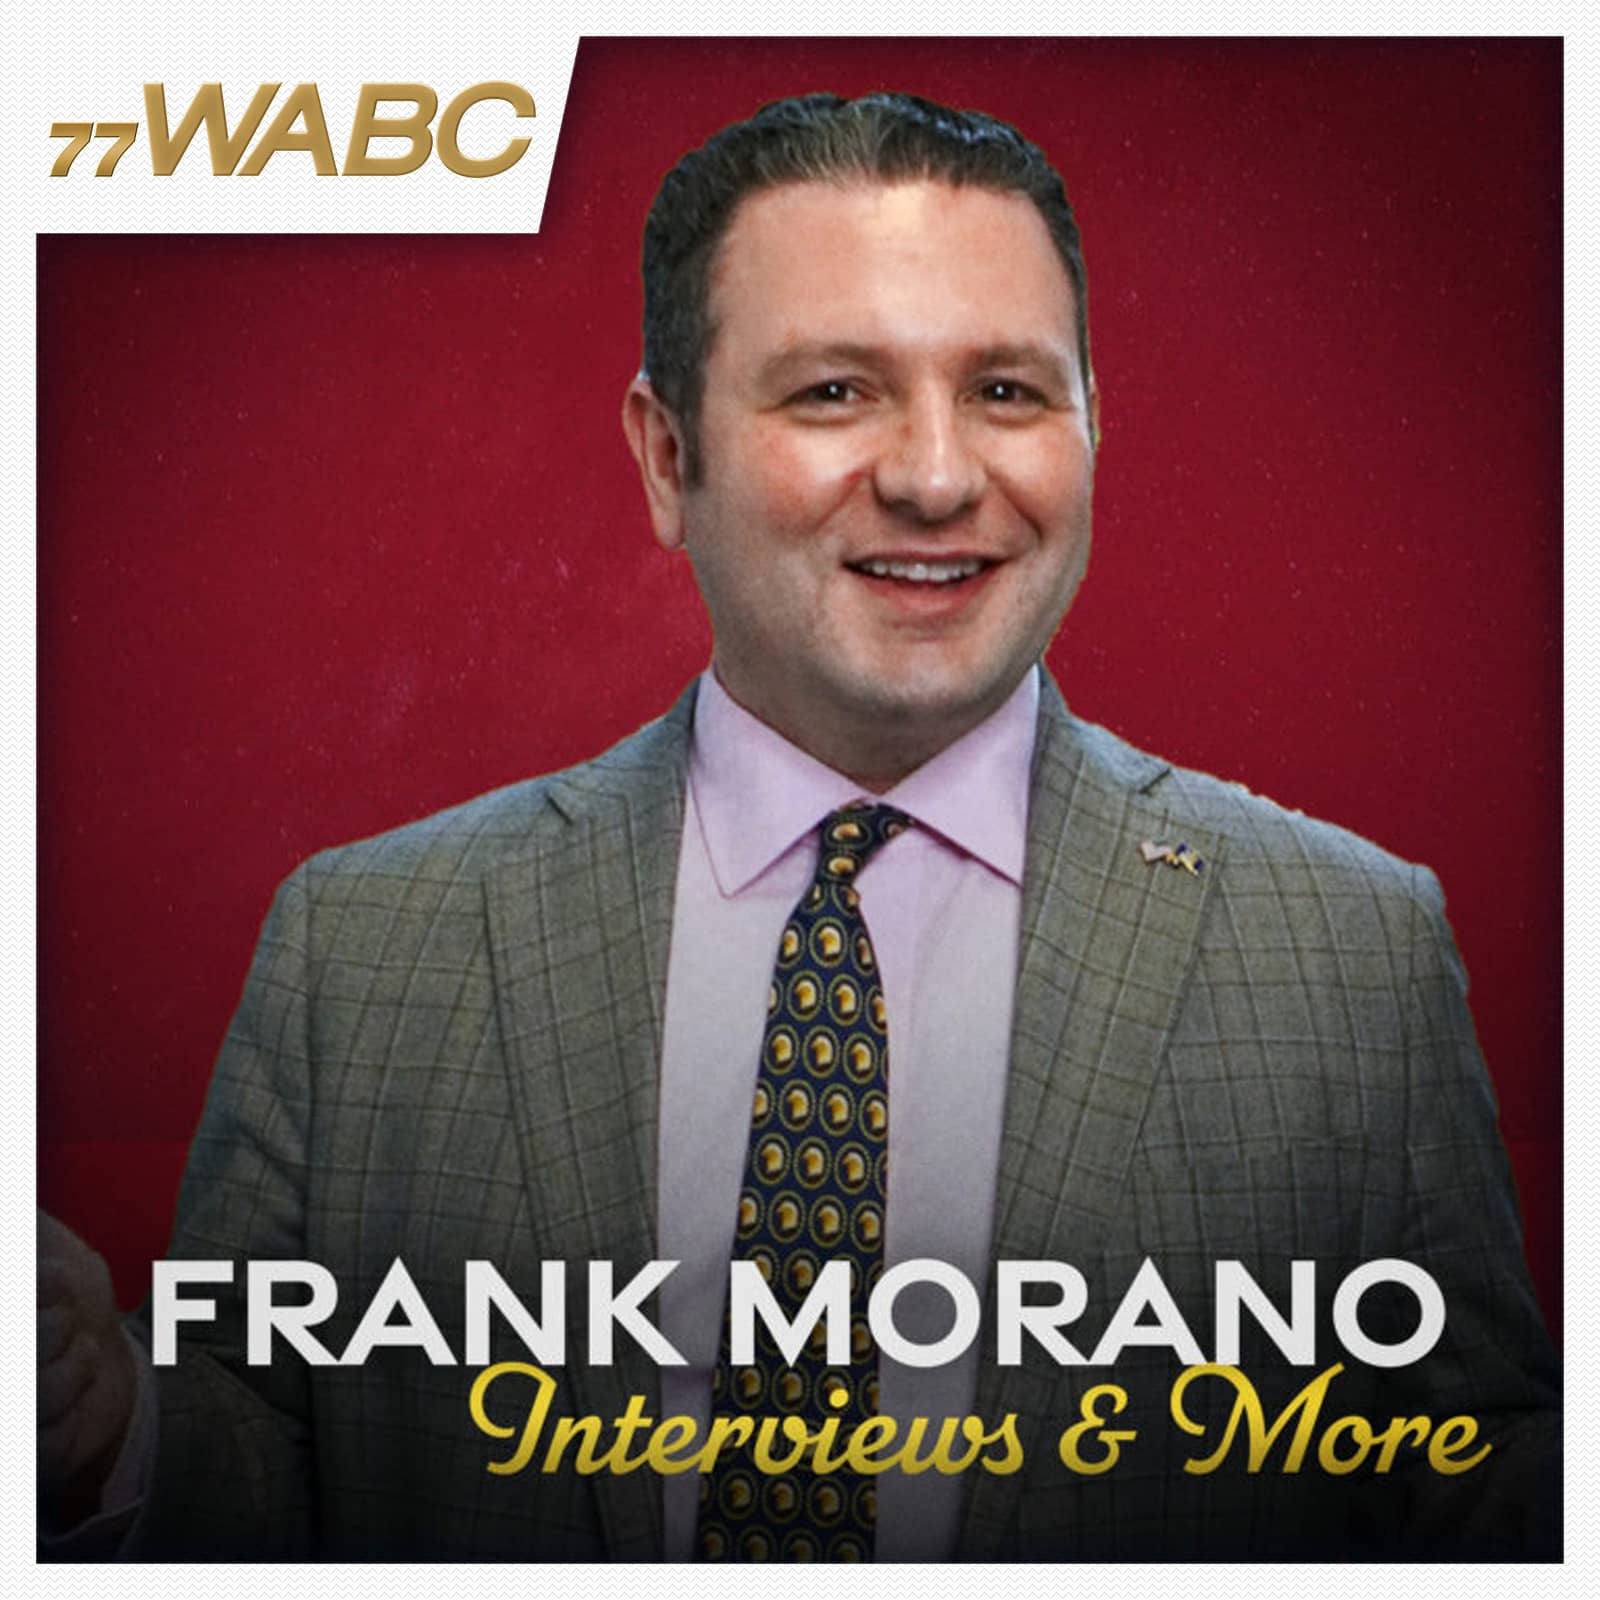 frank-morano-interviews-and-more-podcast-new-logo-179